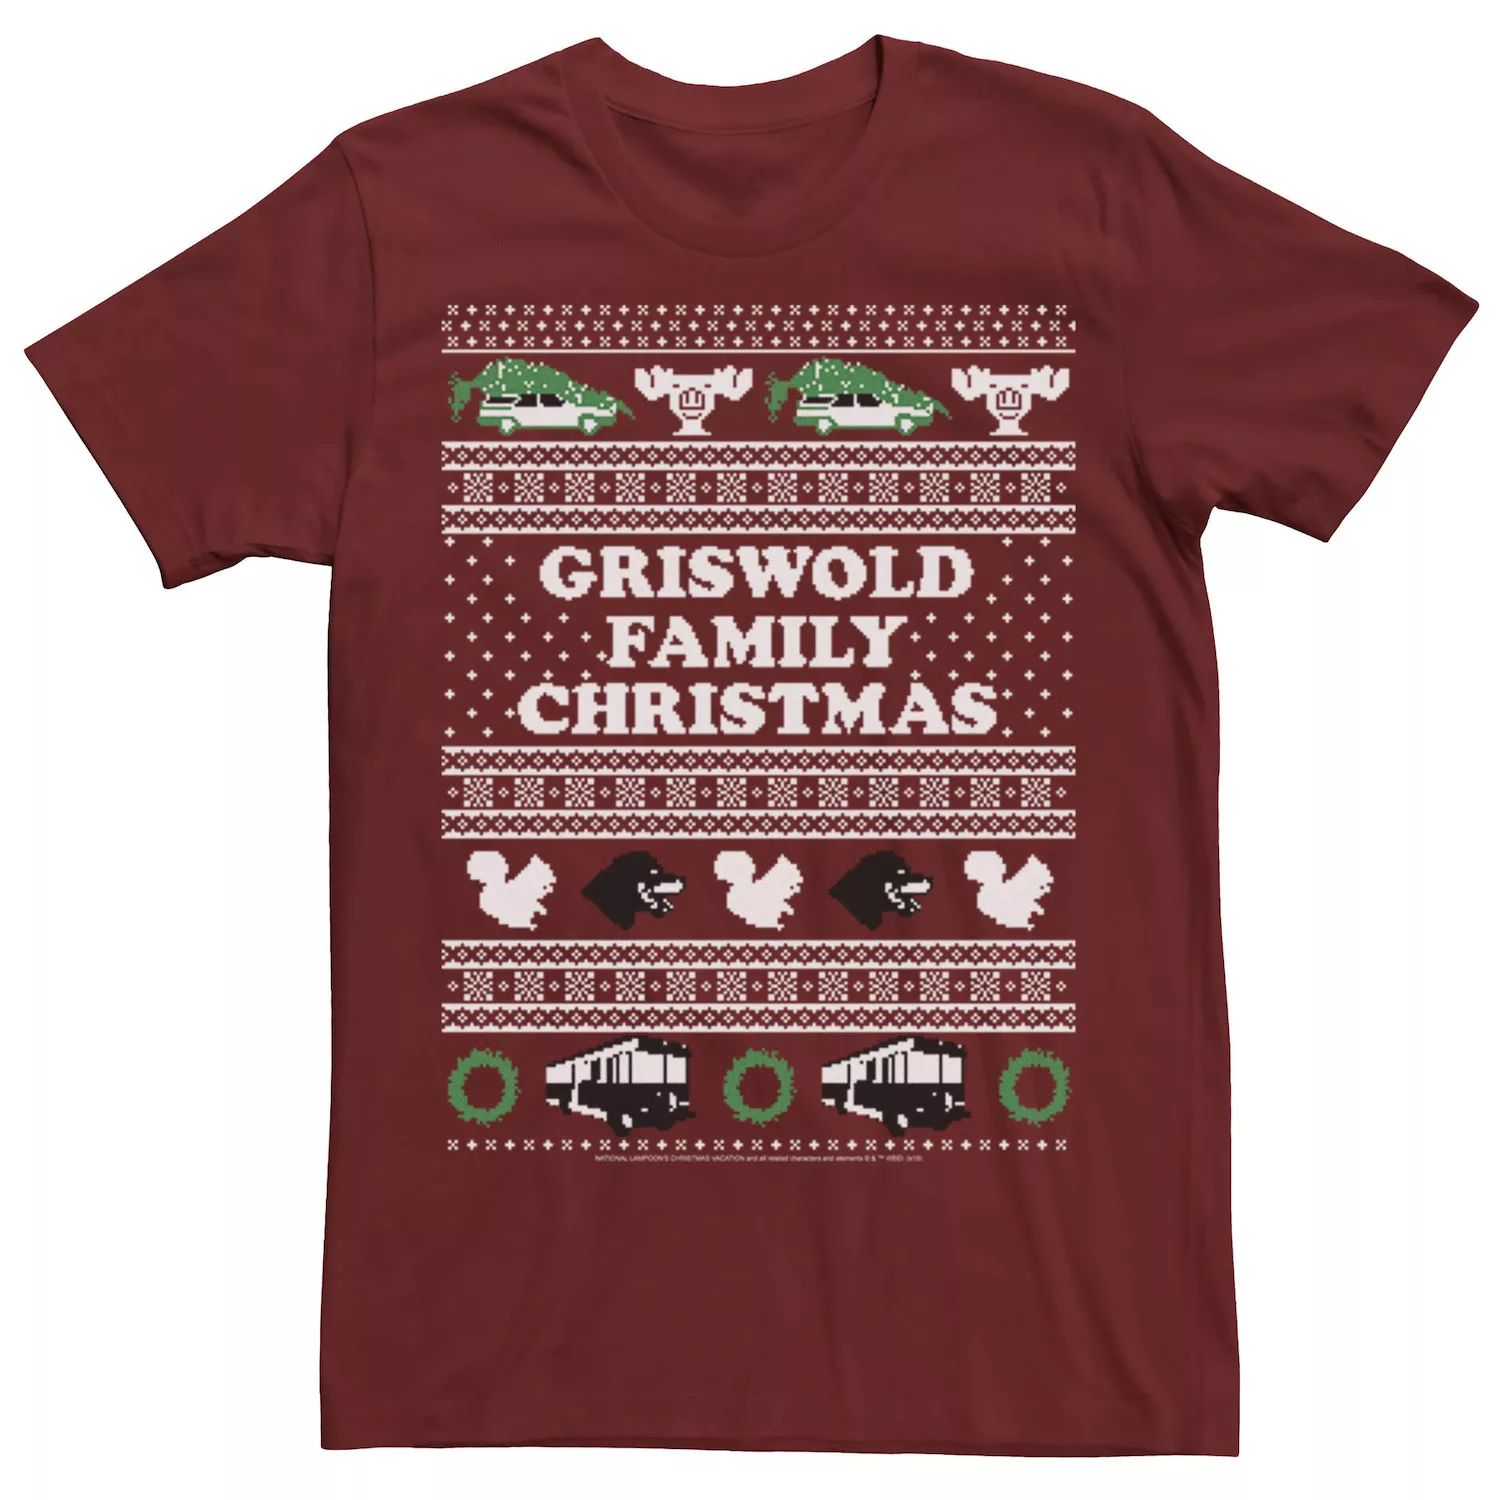 Мужская футболка-свитер Griswold Family Ugly на Рождество и каникулы Licensed Character